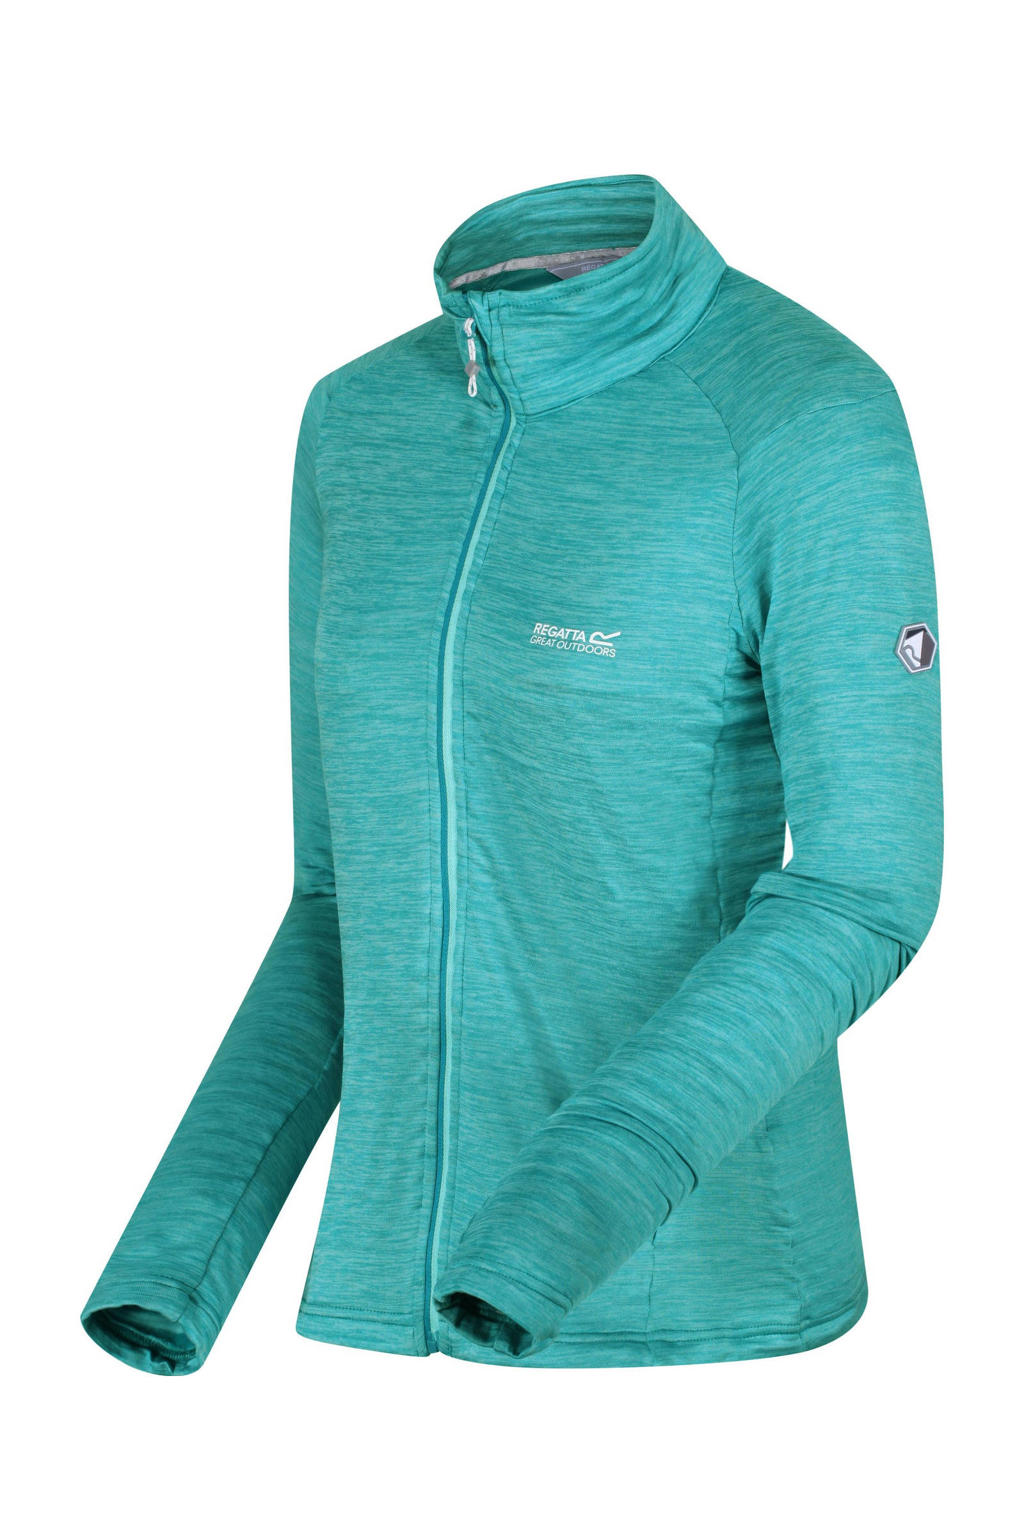 Regatta outdoor vest Highton Lite turquoise